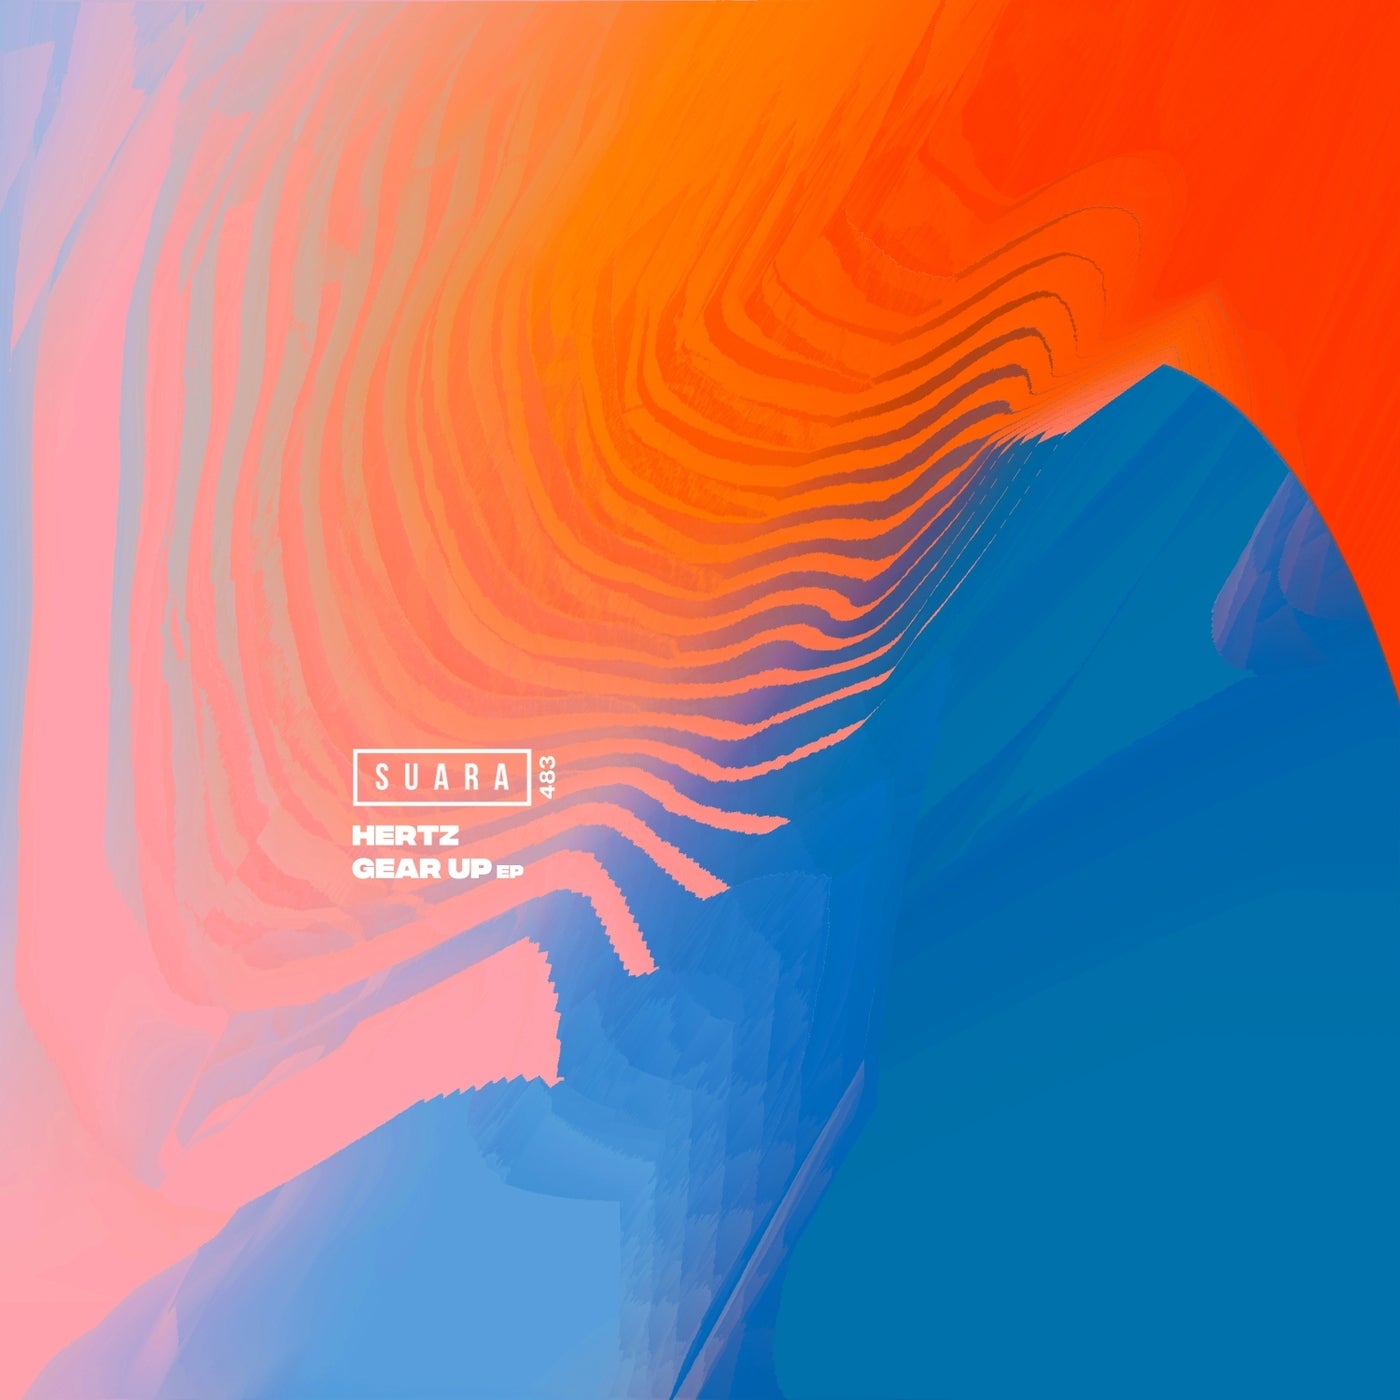 Hertz - Gear Up EP [Suara] | Music & Downloads on Beatport